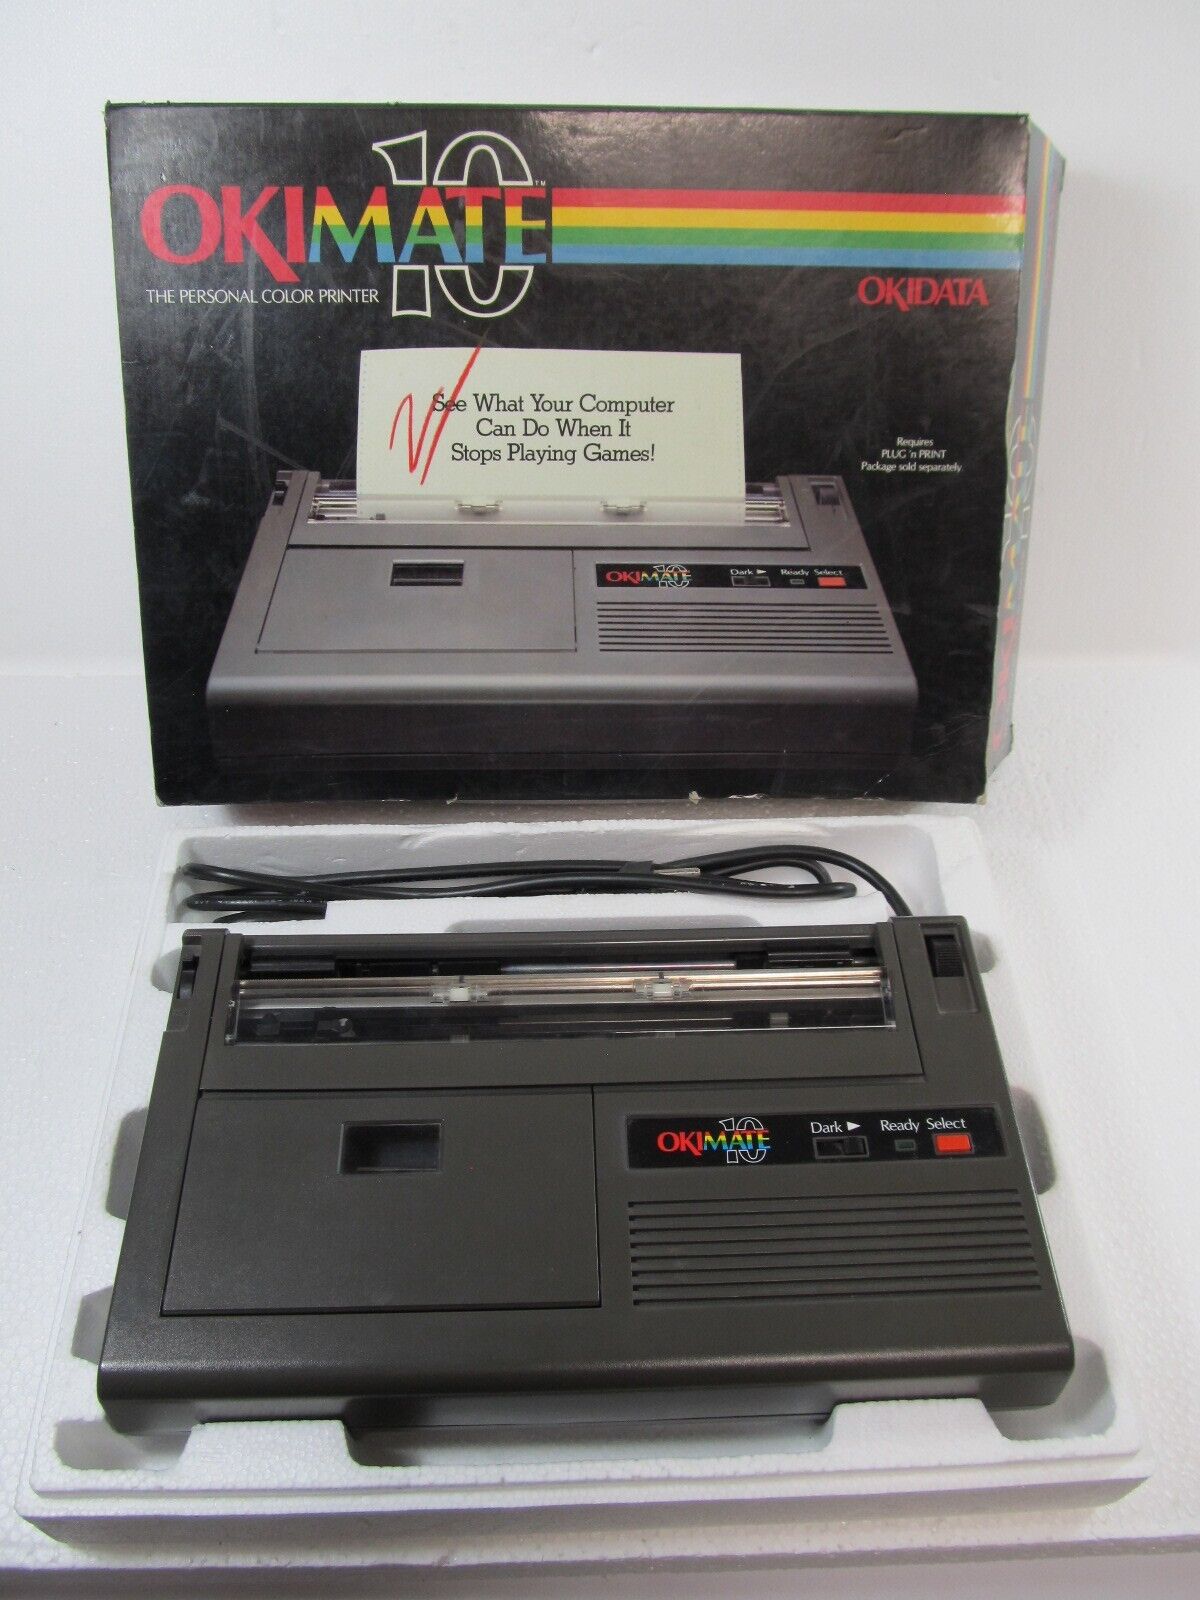 Okidata Okimate 10 The Personal Printer for Commodore